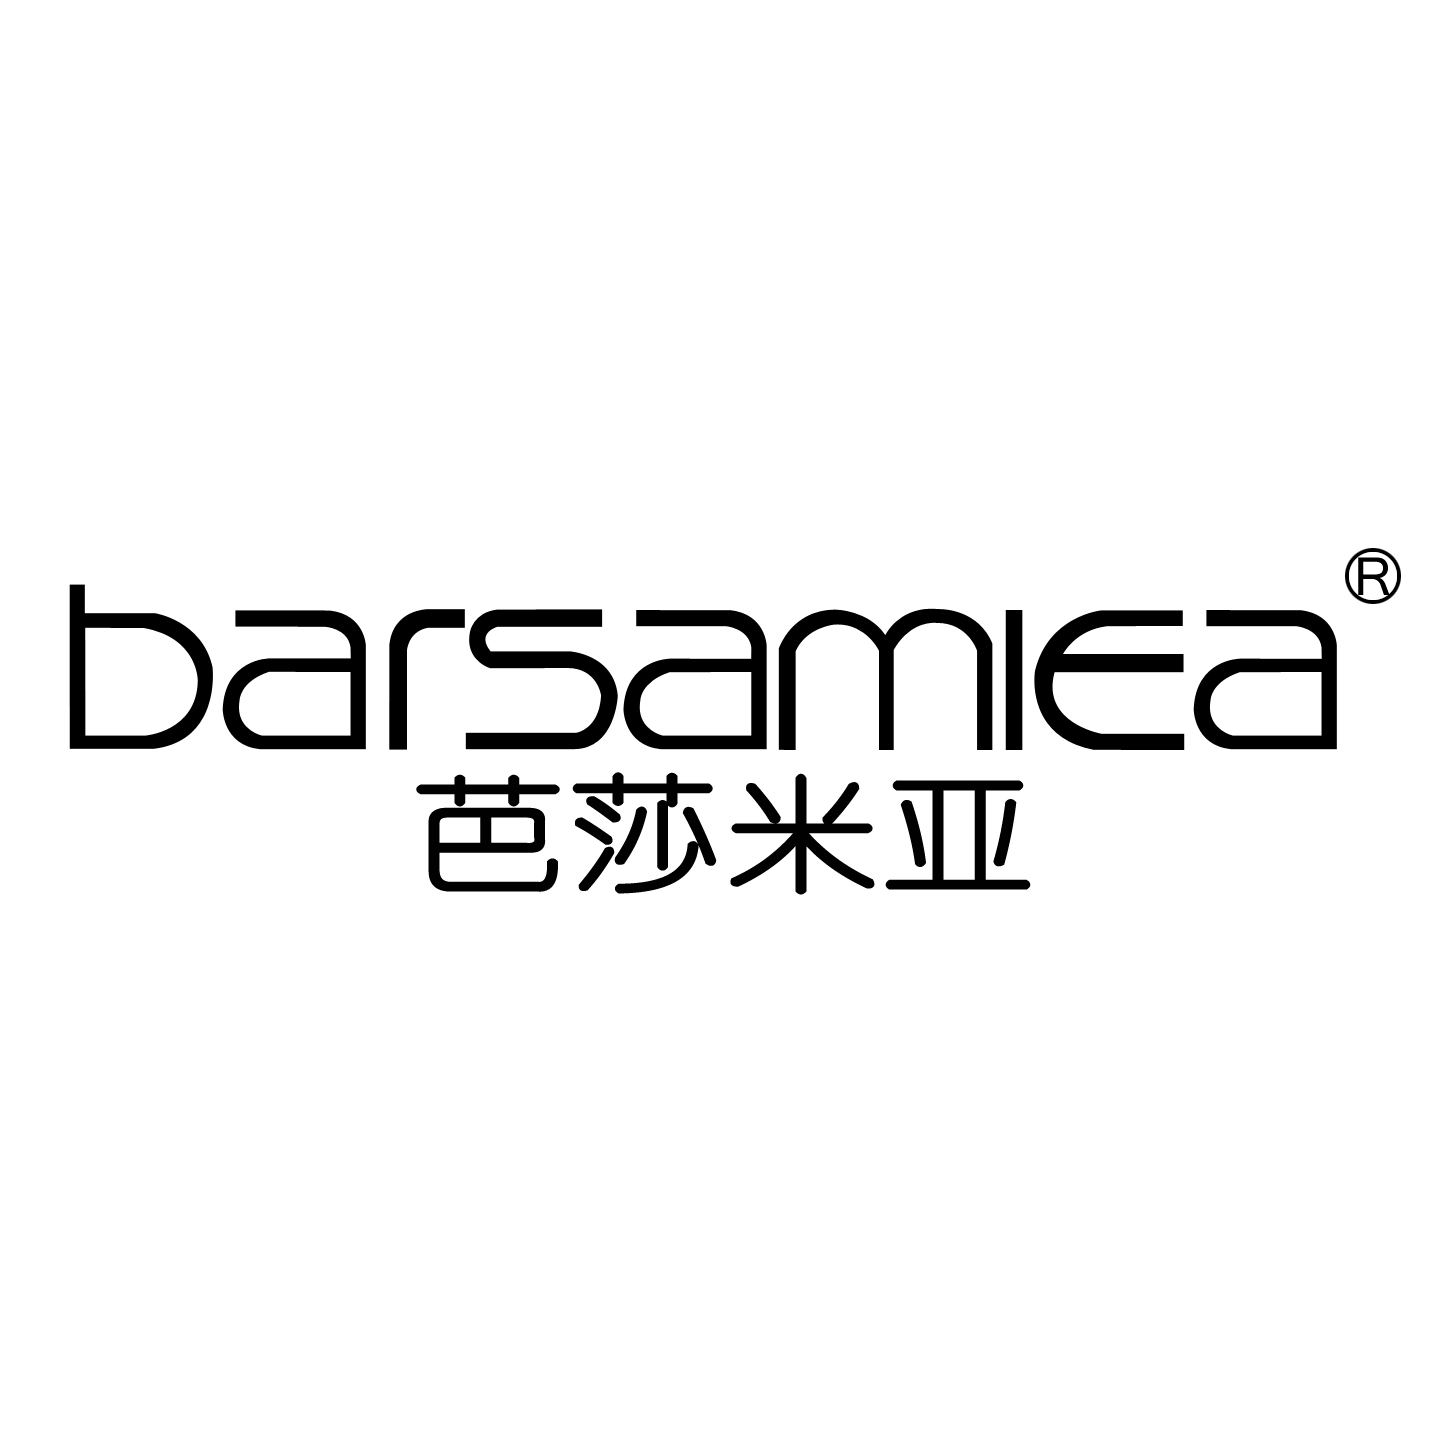 barsamiea芭莎米亚旗舰店